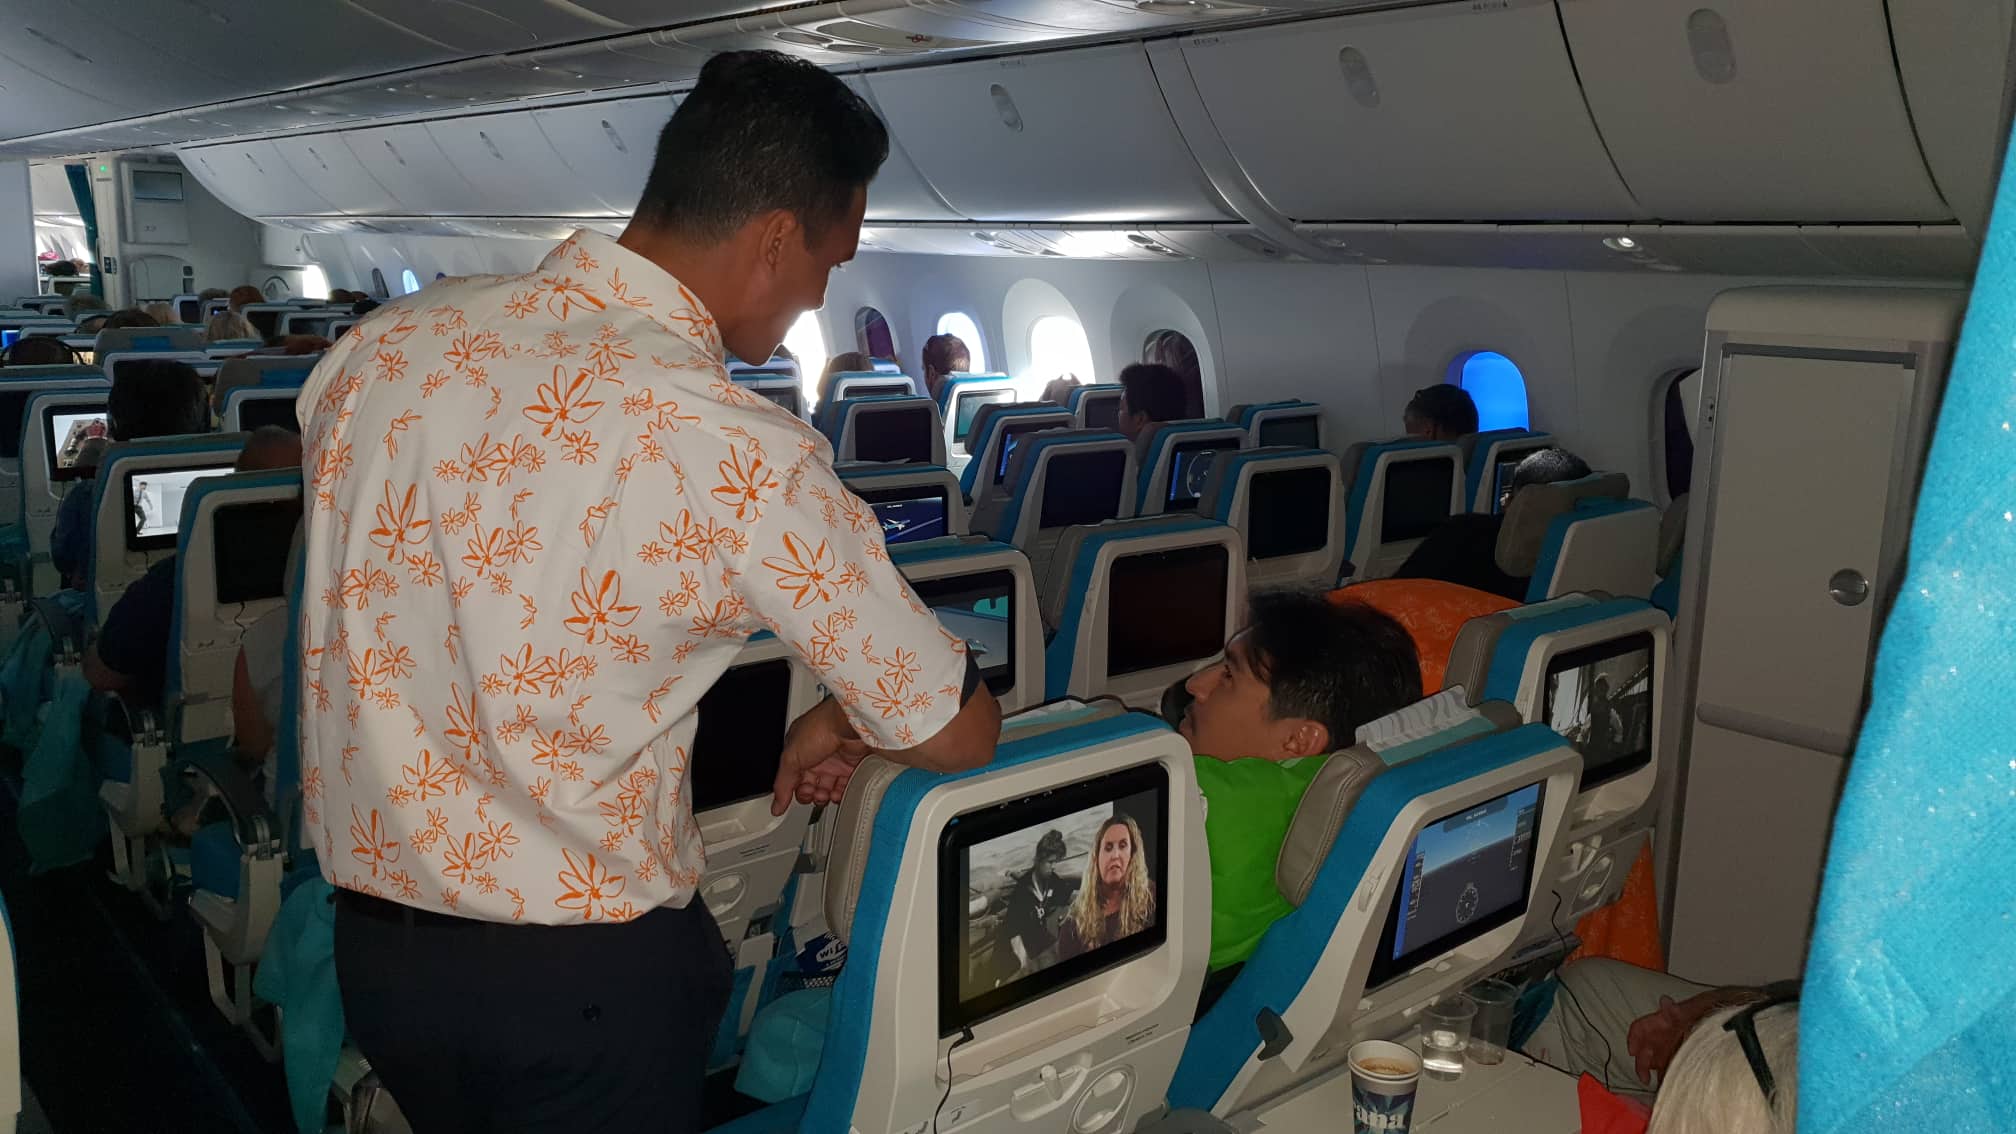 Premier vol commercial du Dreamliner d'Air Tahiti Nui